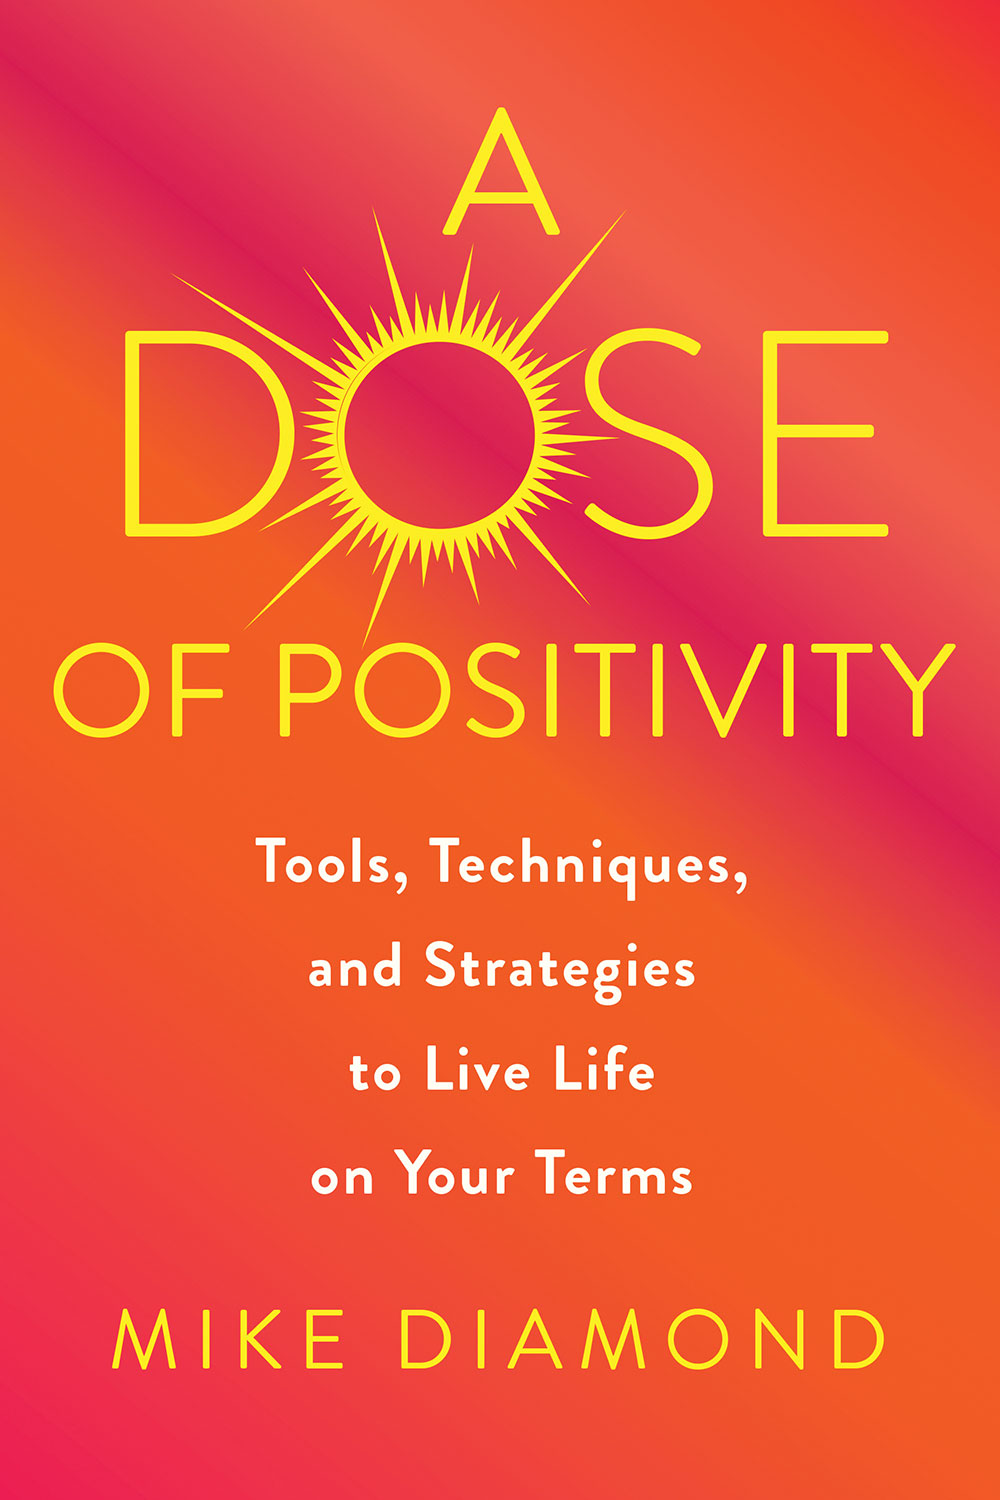 A Dose of Positivity